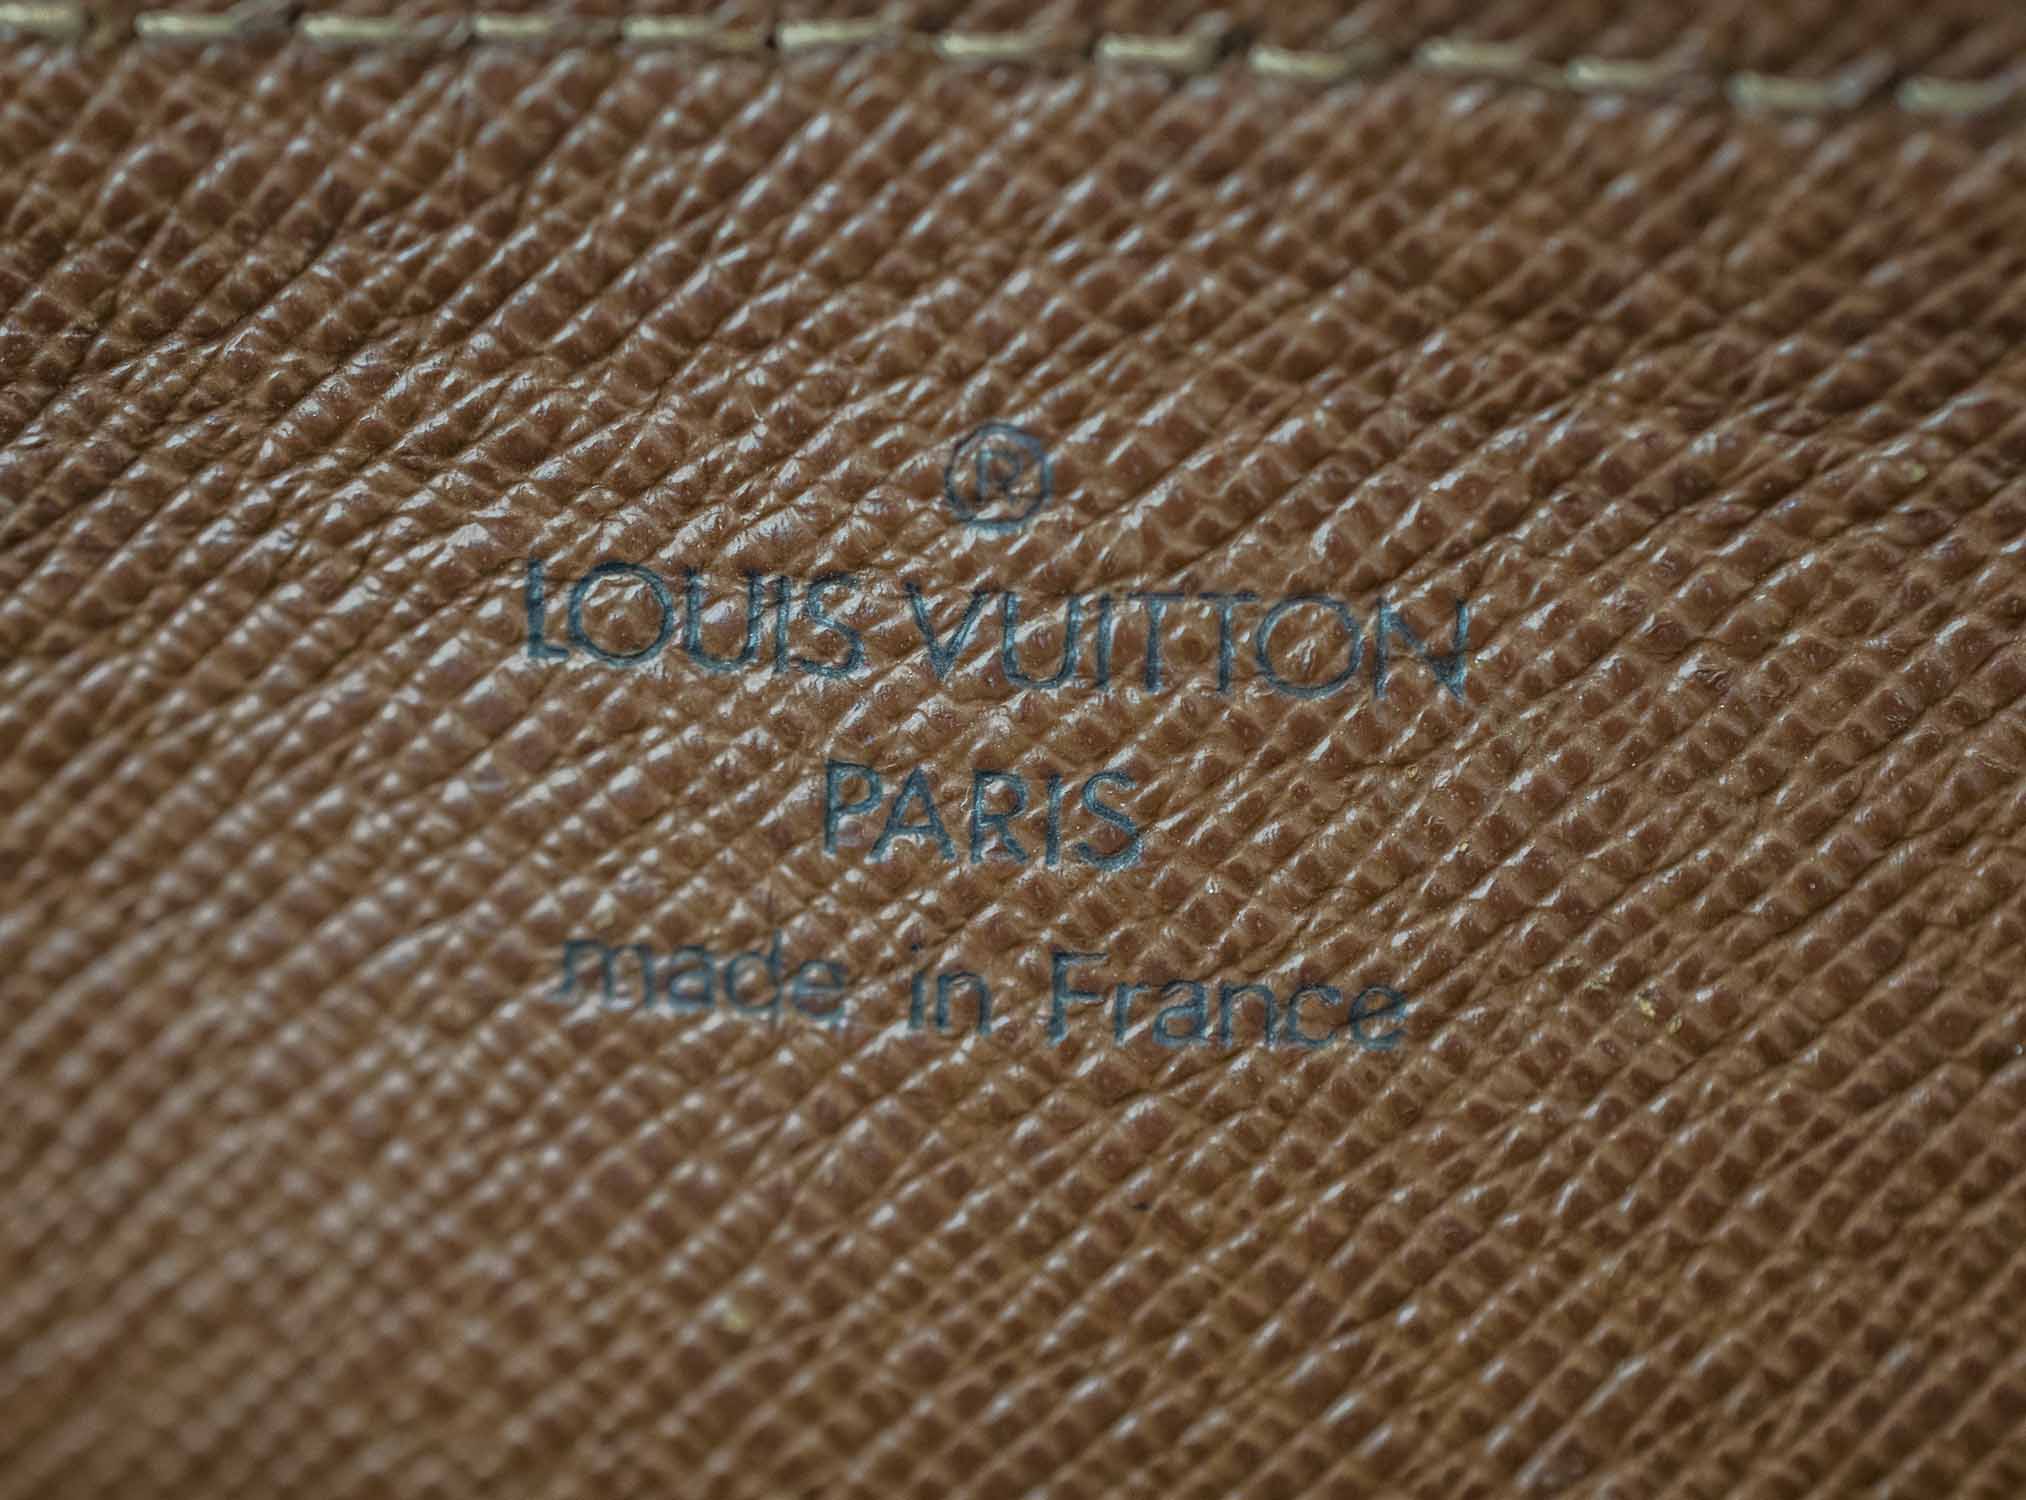 LOUIS VUITTON - Micro Leather Wallet, Classic Monogram includes Dust Bag